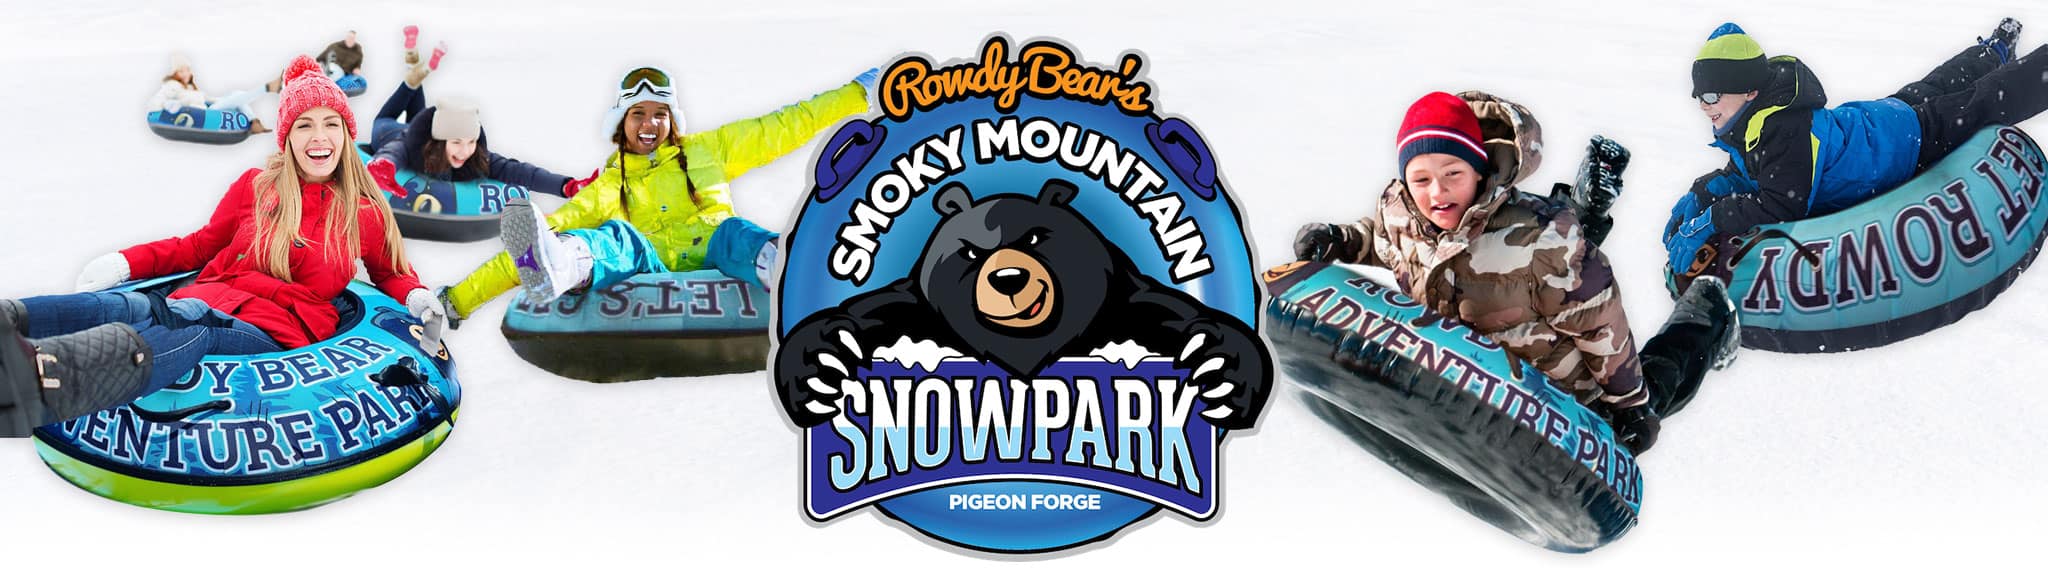 Rowdy Bear Snowpark Header Photo